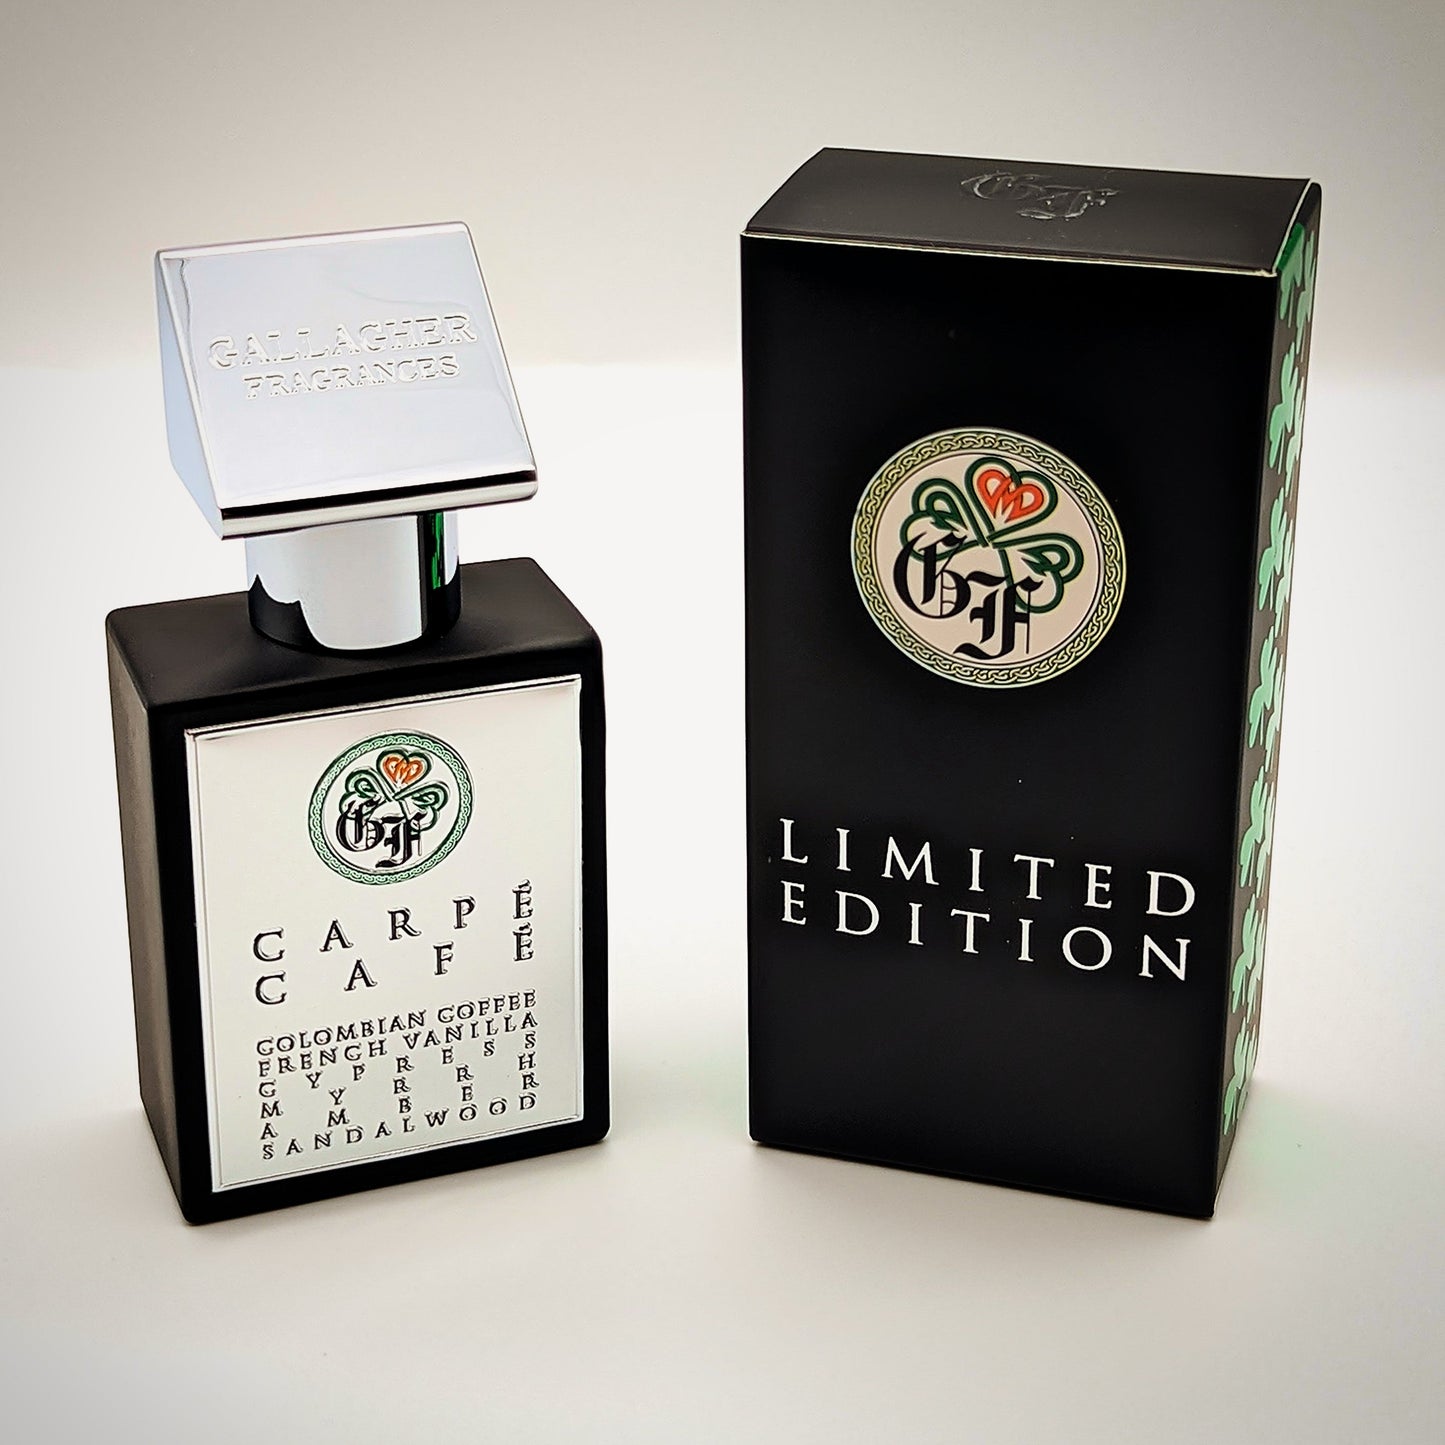 Carpé Café - Limited Edition